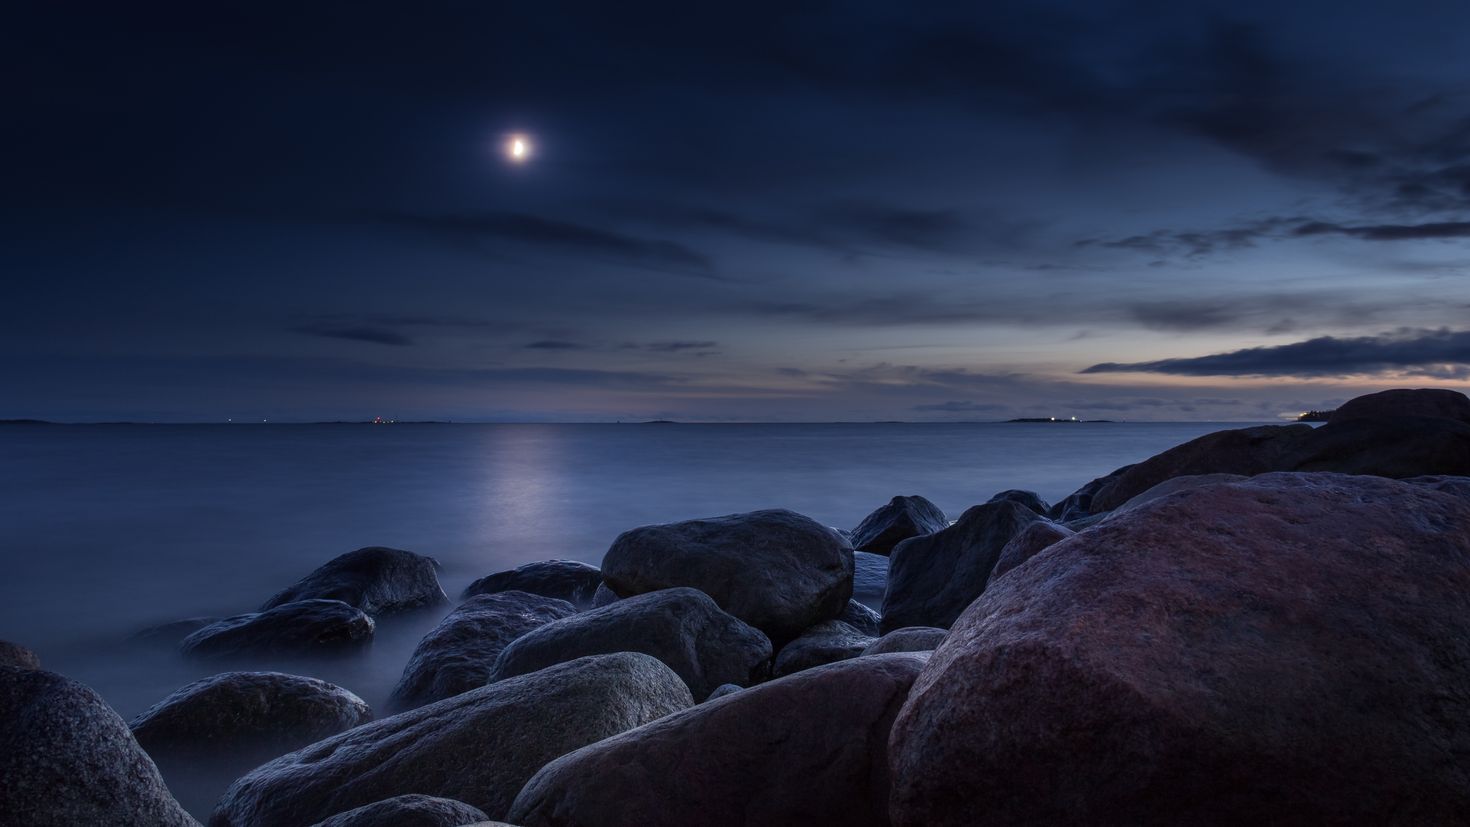 Night stone. Ночное море. Ночь в море. Луна над морем. Океан ночью.